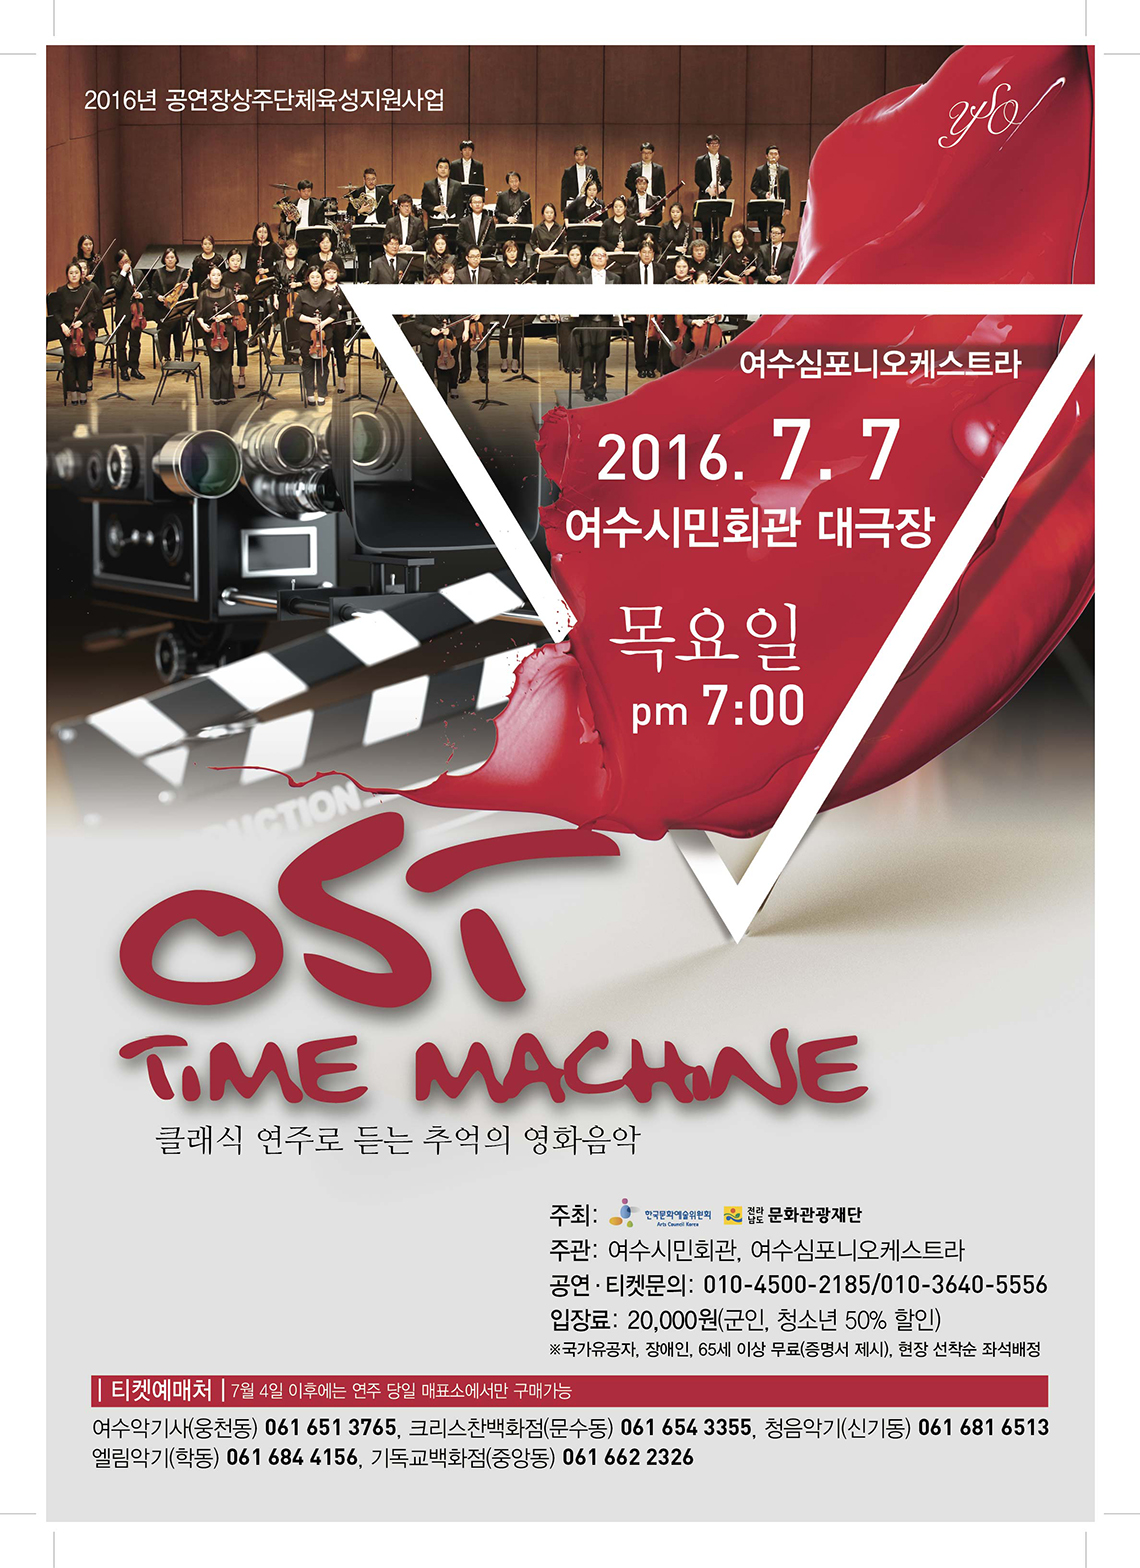 OST Time machine